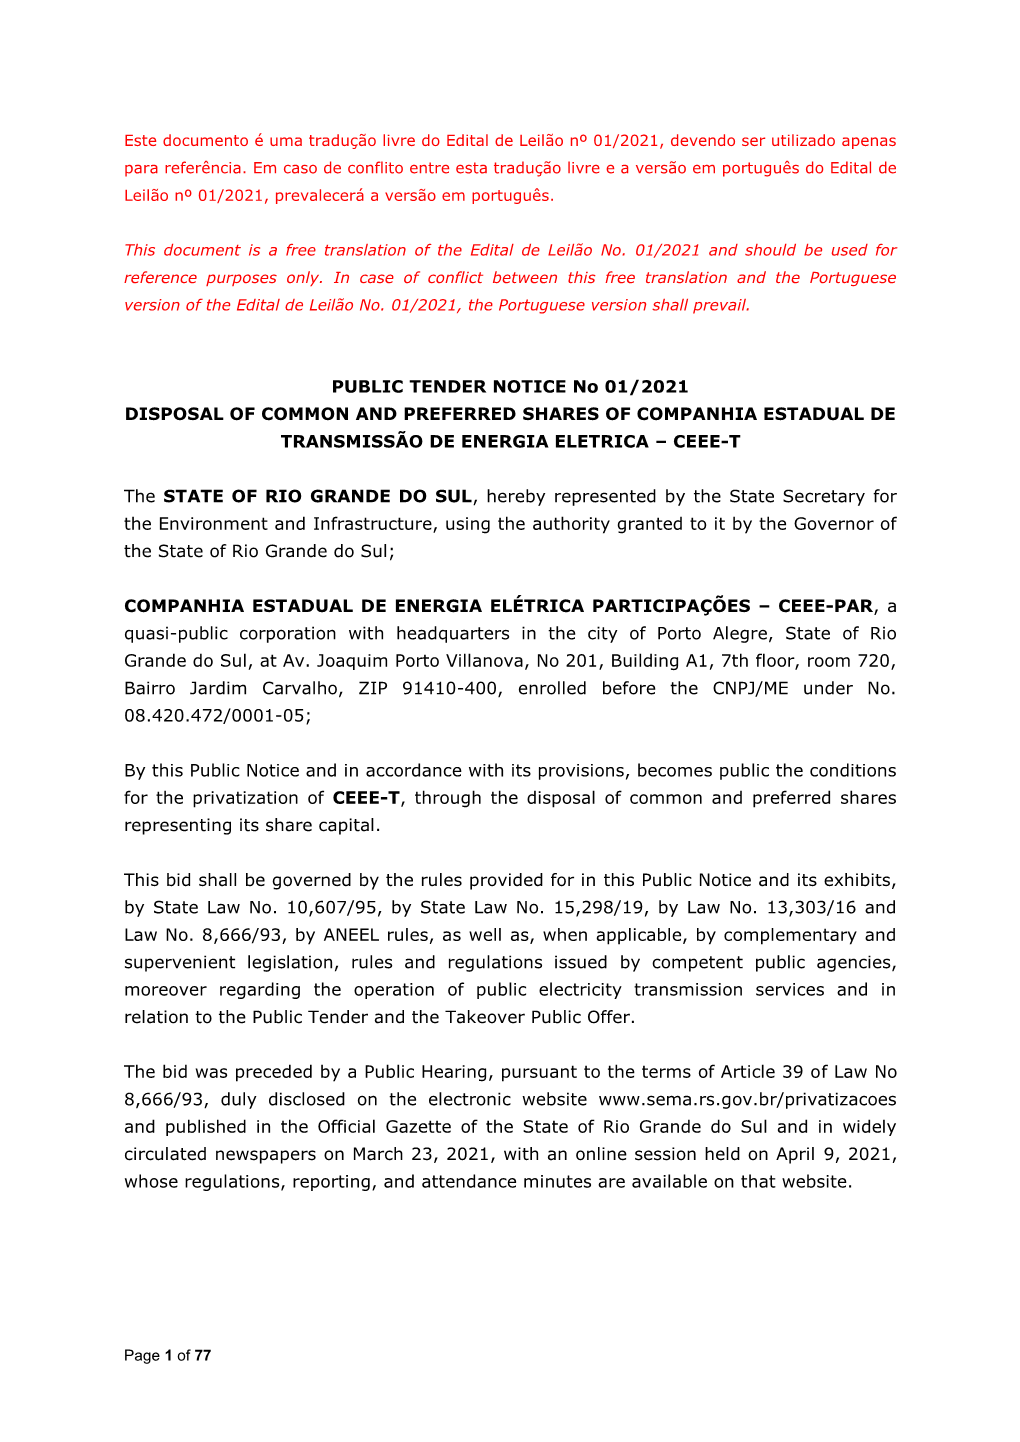 PUBLIC TENDER NOTICE No 01/2021 DISPOSAL of COMMON and PREFERRED SHARES of COMPANHIA ESTADUAL DE TRANSMISSÃO DE ENERGIA ELETRICA – CEEE-T